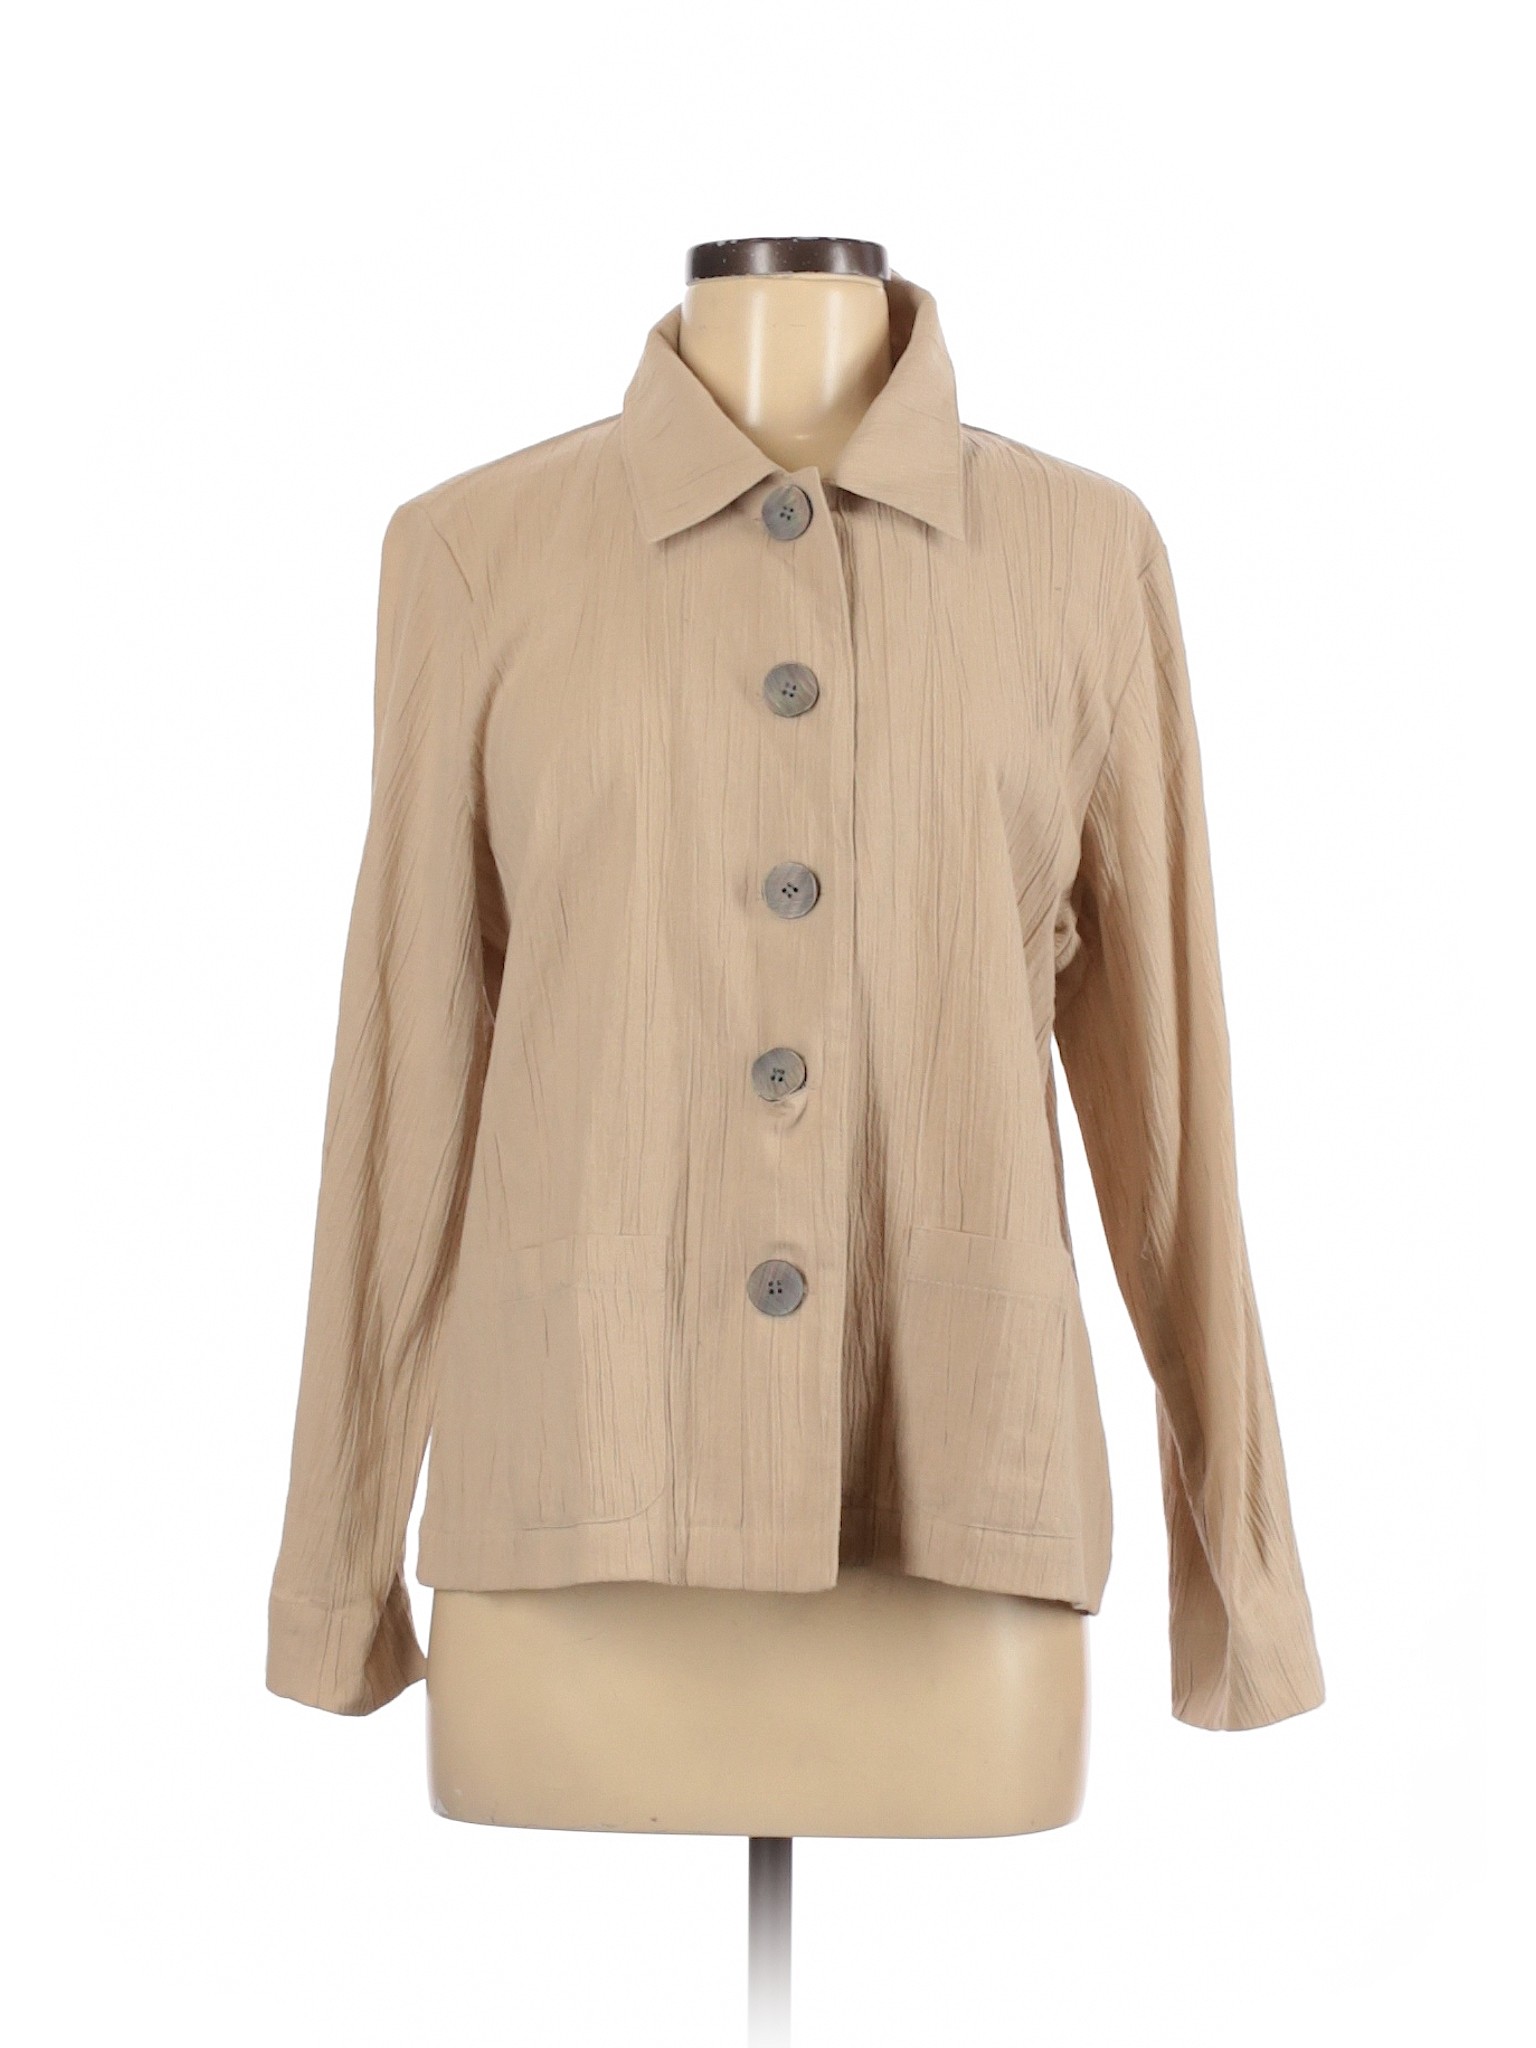 Appleseeds Women Brown Long Sleeve Blouse M | eBay